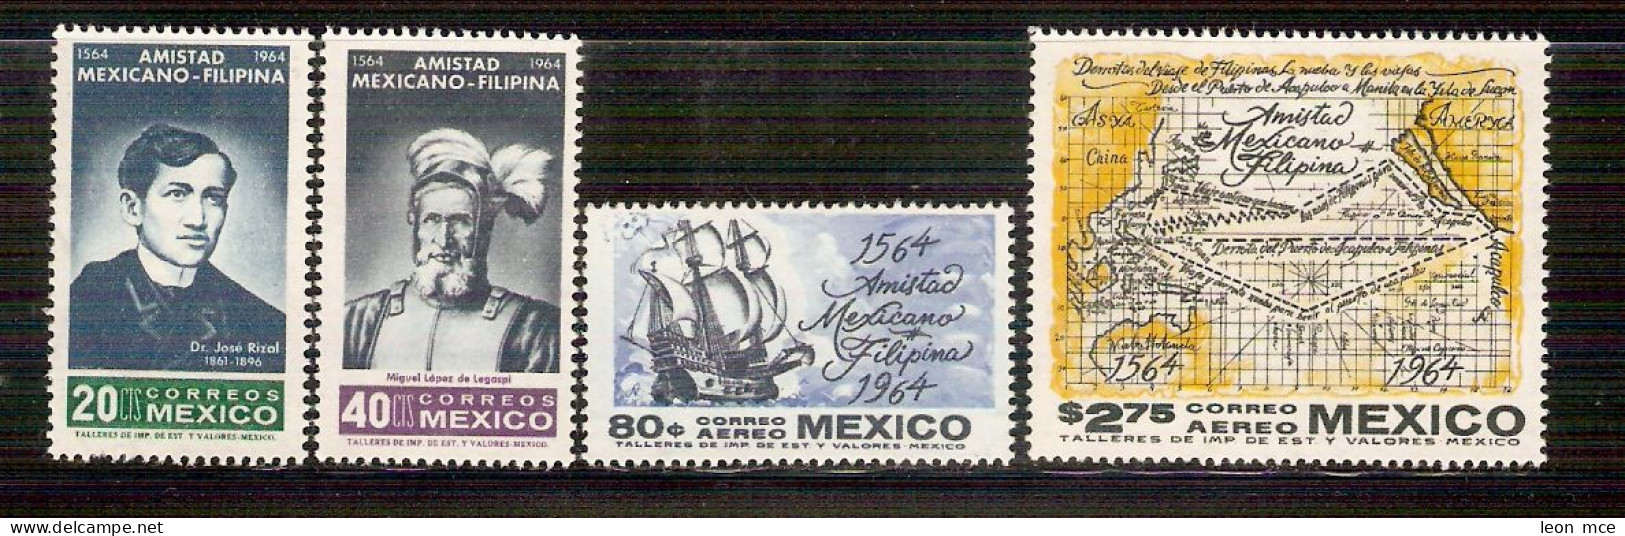 1964 MÉXICO 400 AÑOS AMISTAD MEX. FILIPINAS Sc. 956-957, C300-C301 (4) MNH. 400 YEARS OF MEXICO-PHILIPPINES FRIENDSHIP - Mexiko